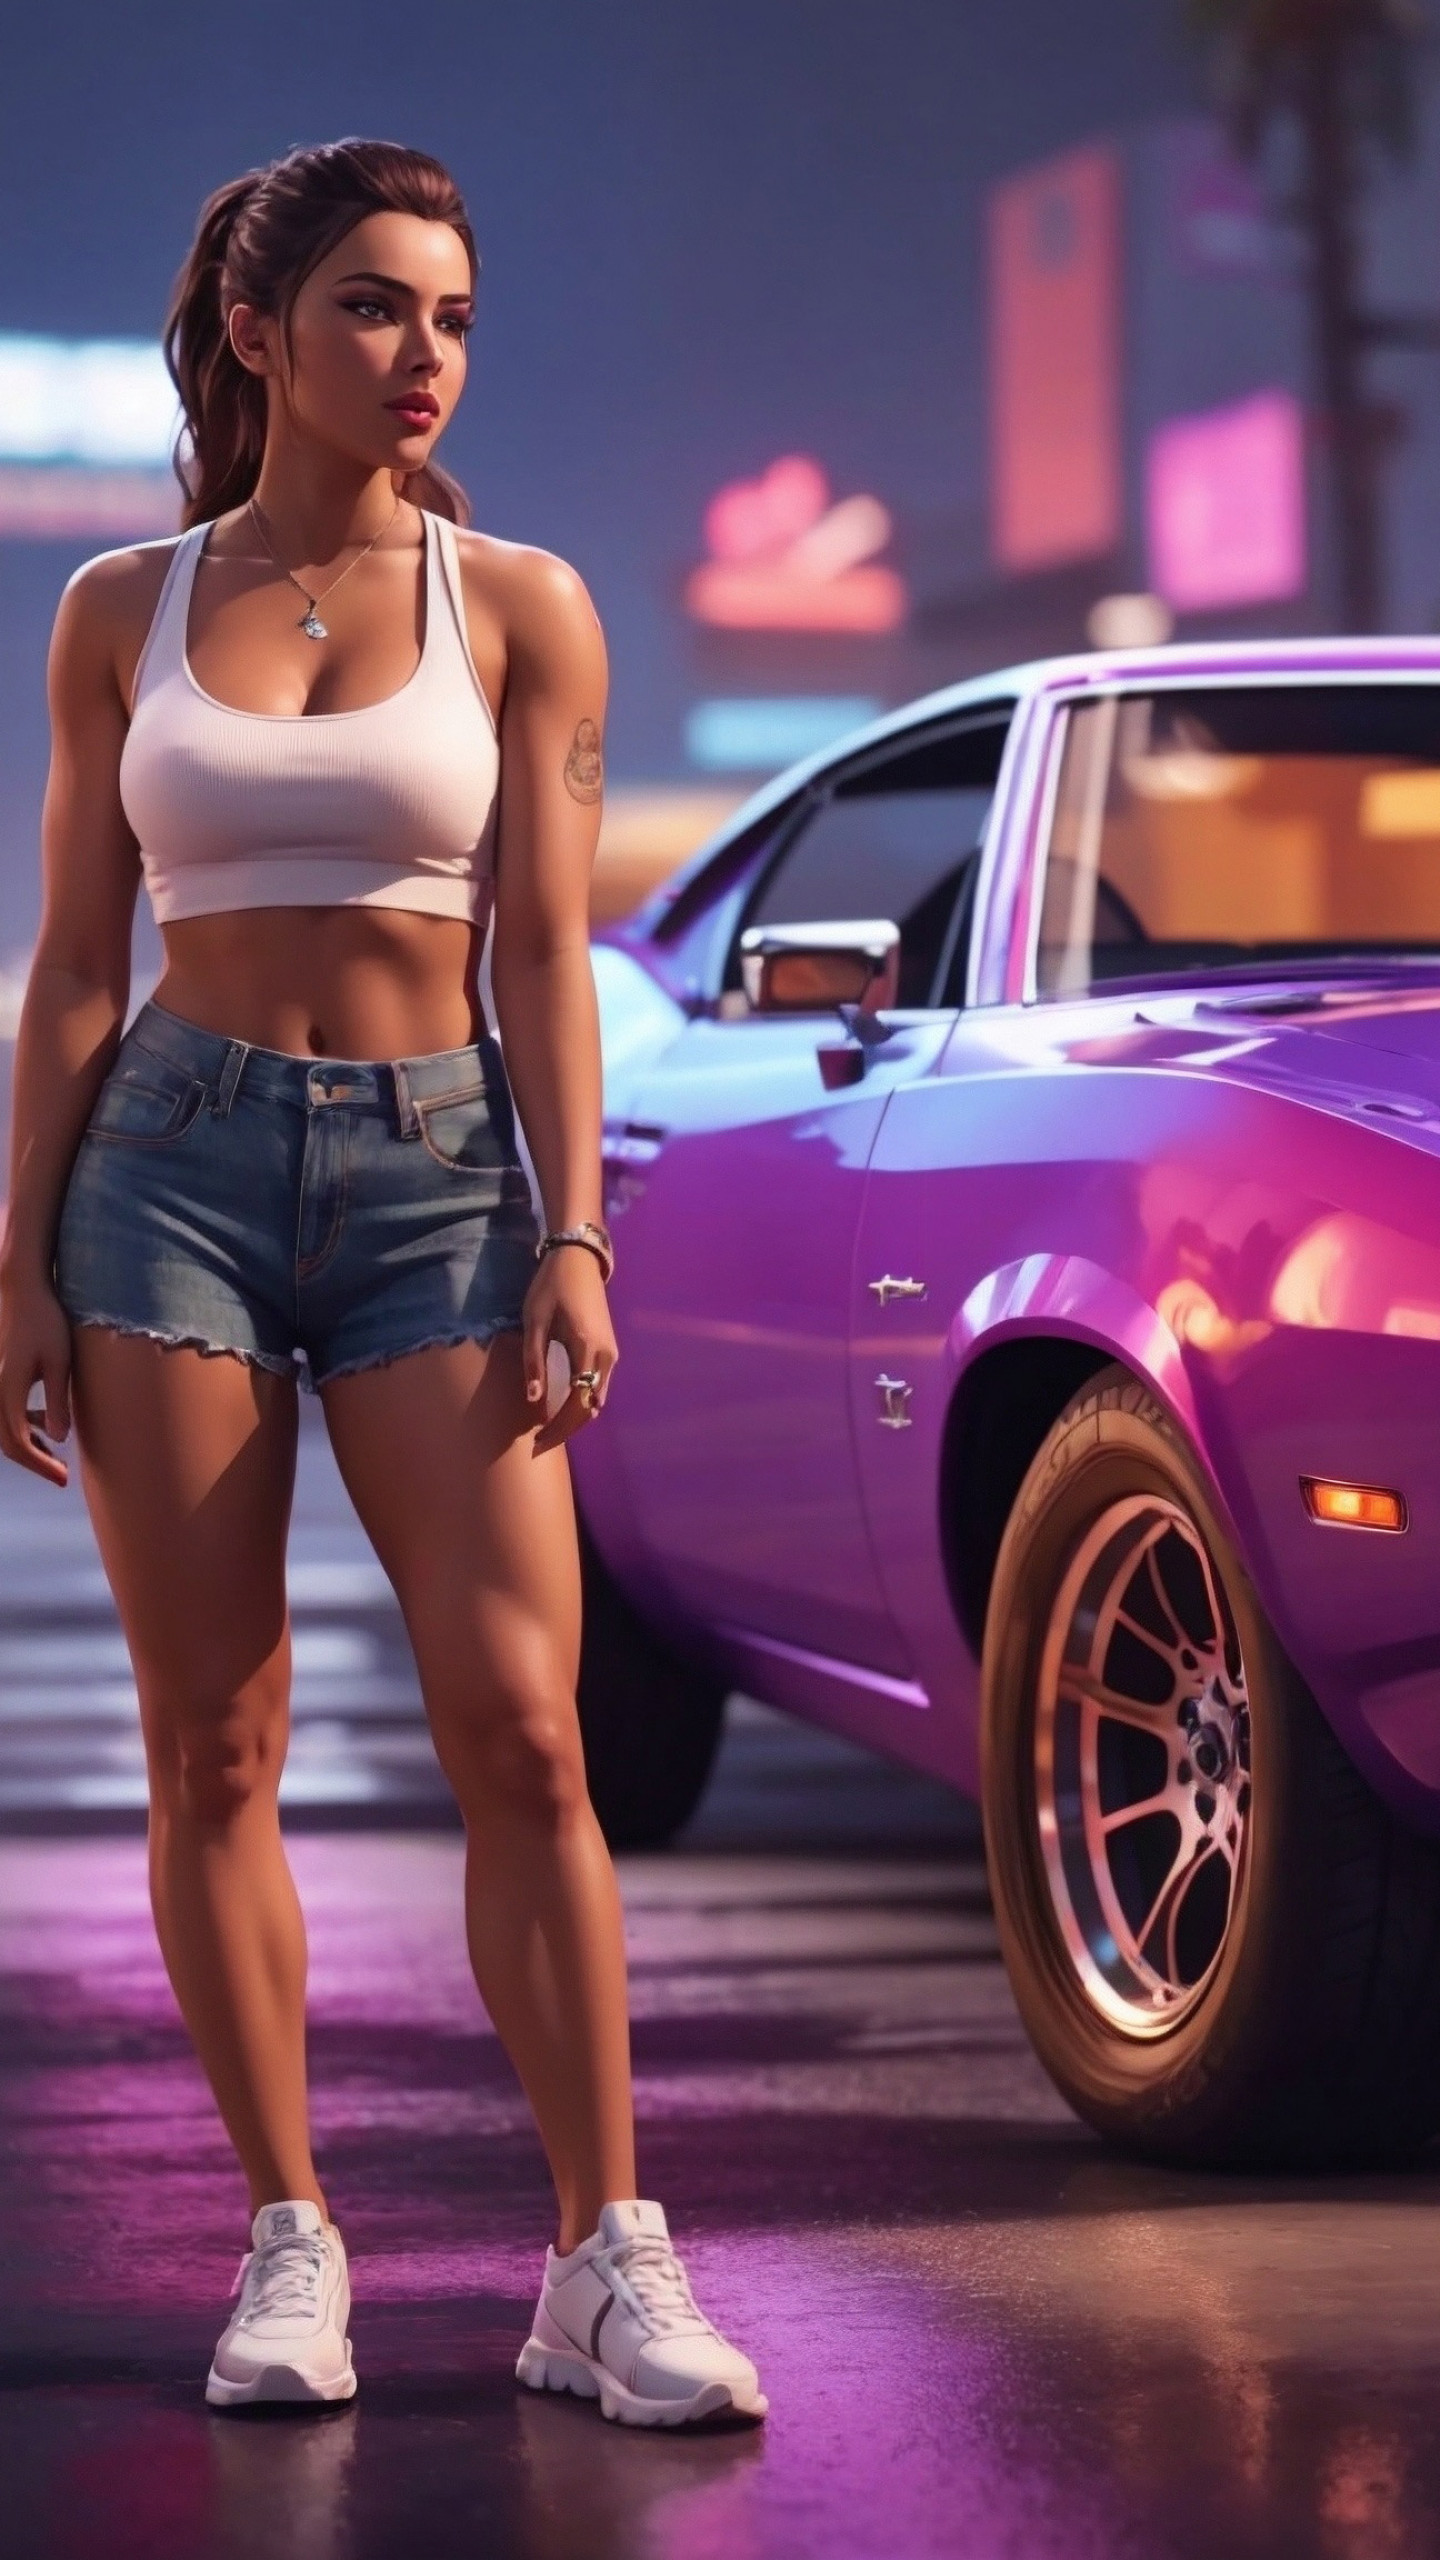 GTA VI Video Game, Muscle Car Ultra HD Desktop Background